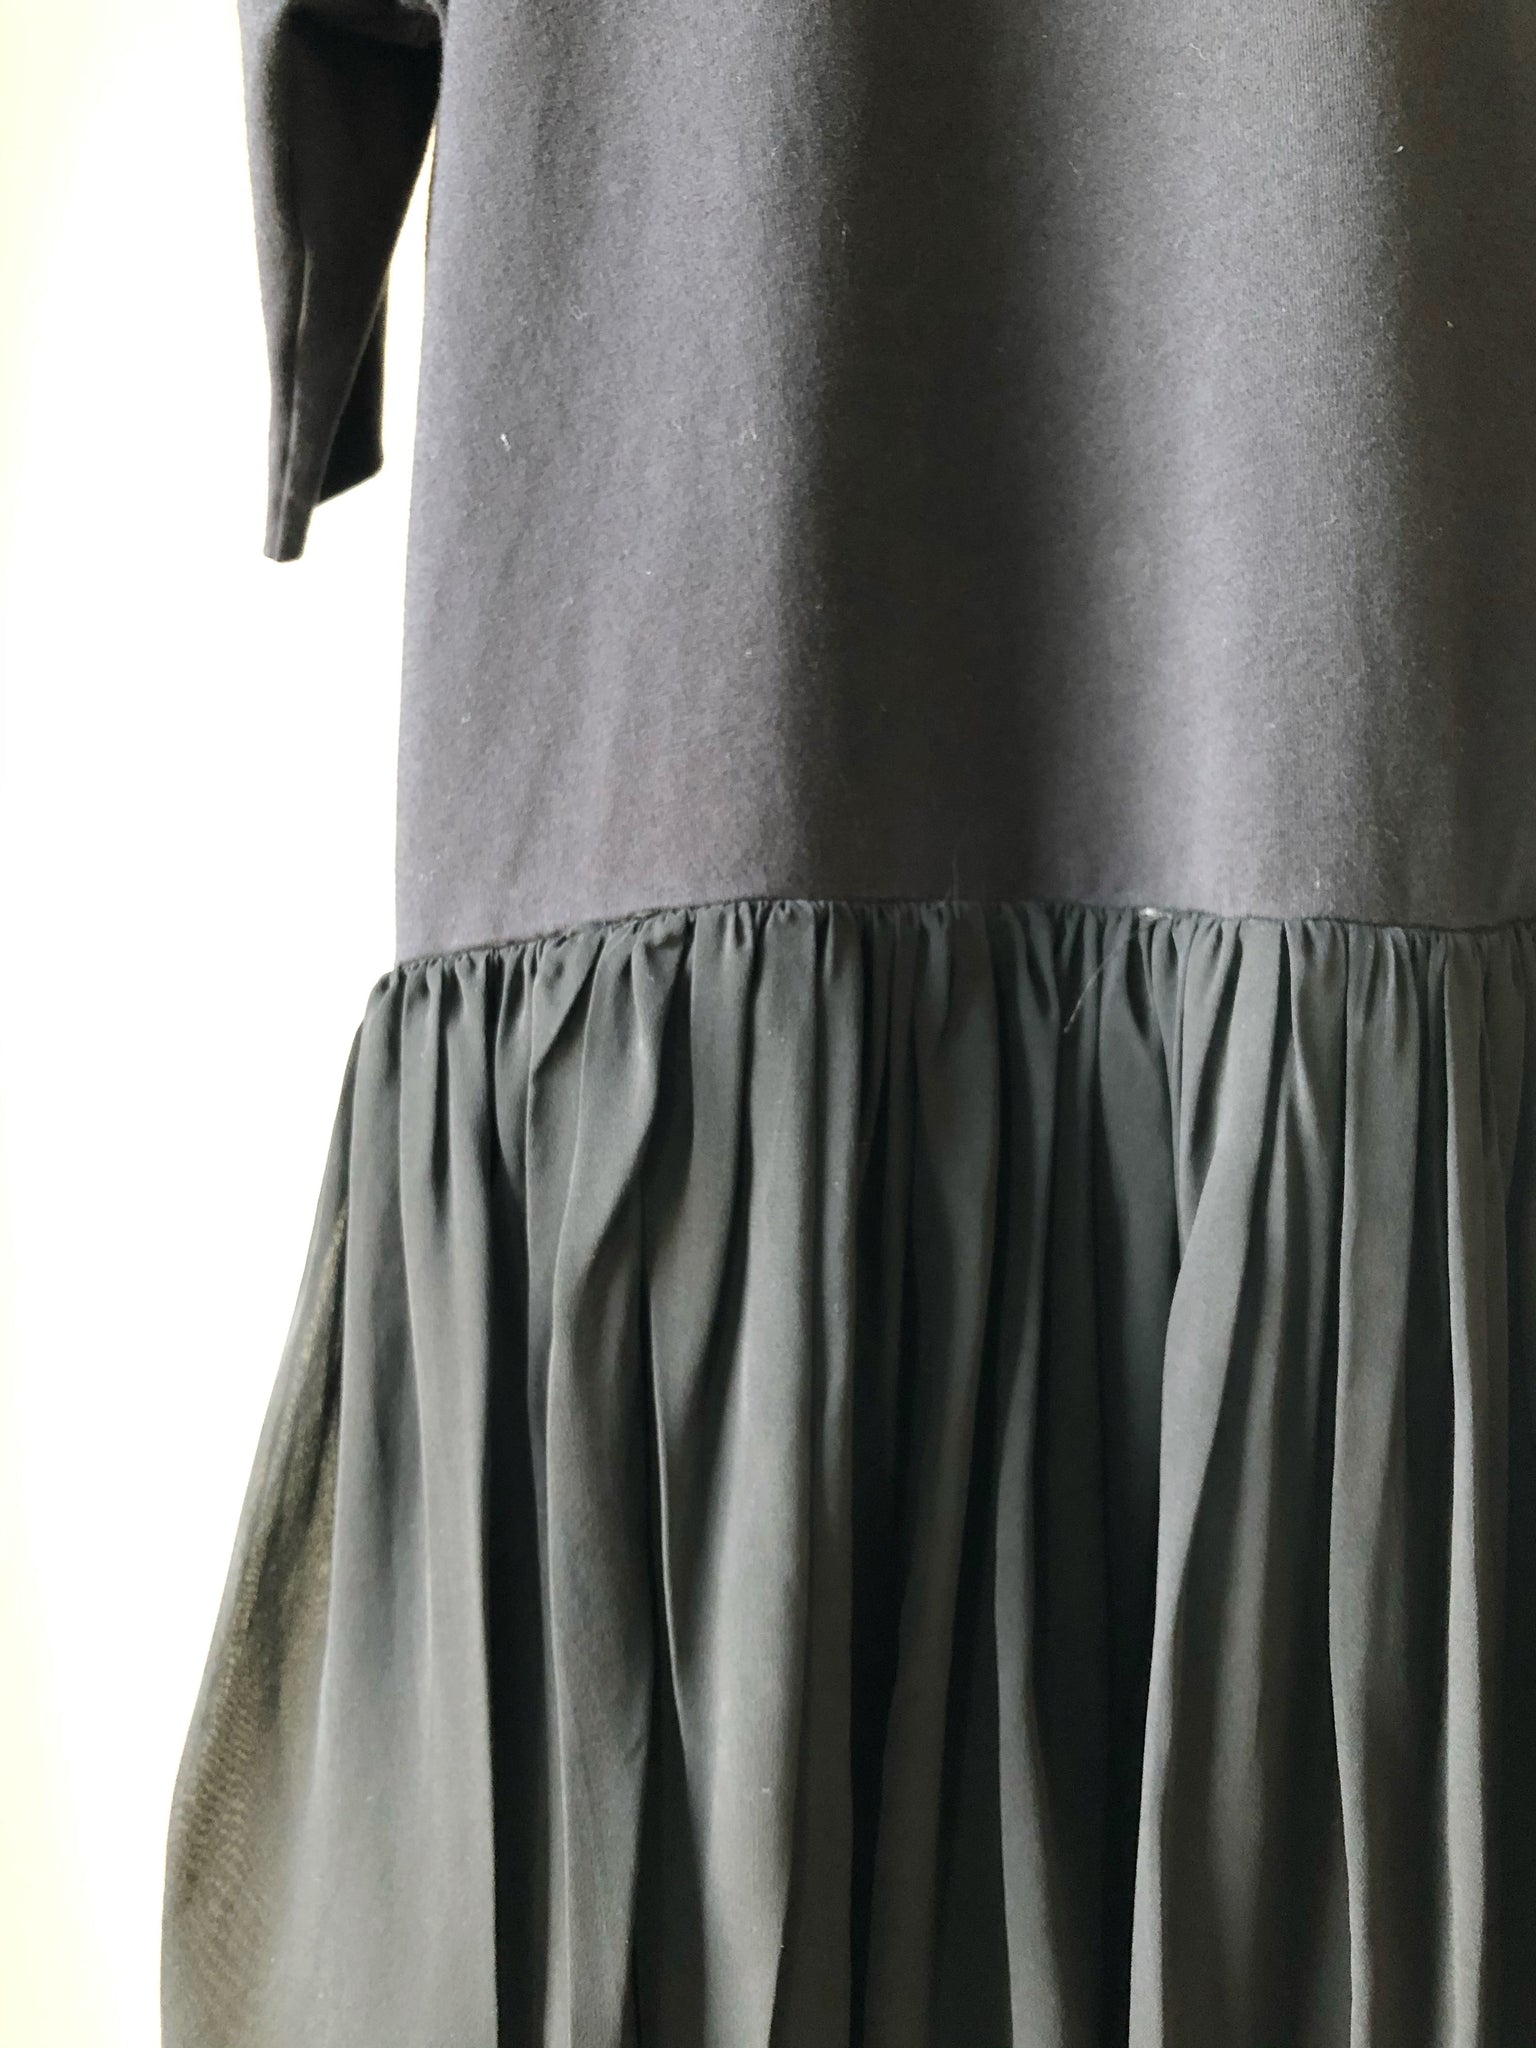 basic summer goth chiffon and jersey crinoline dress – garygraham422